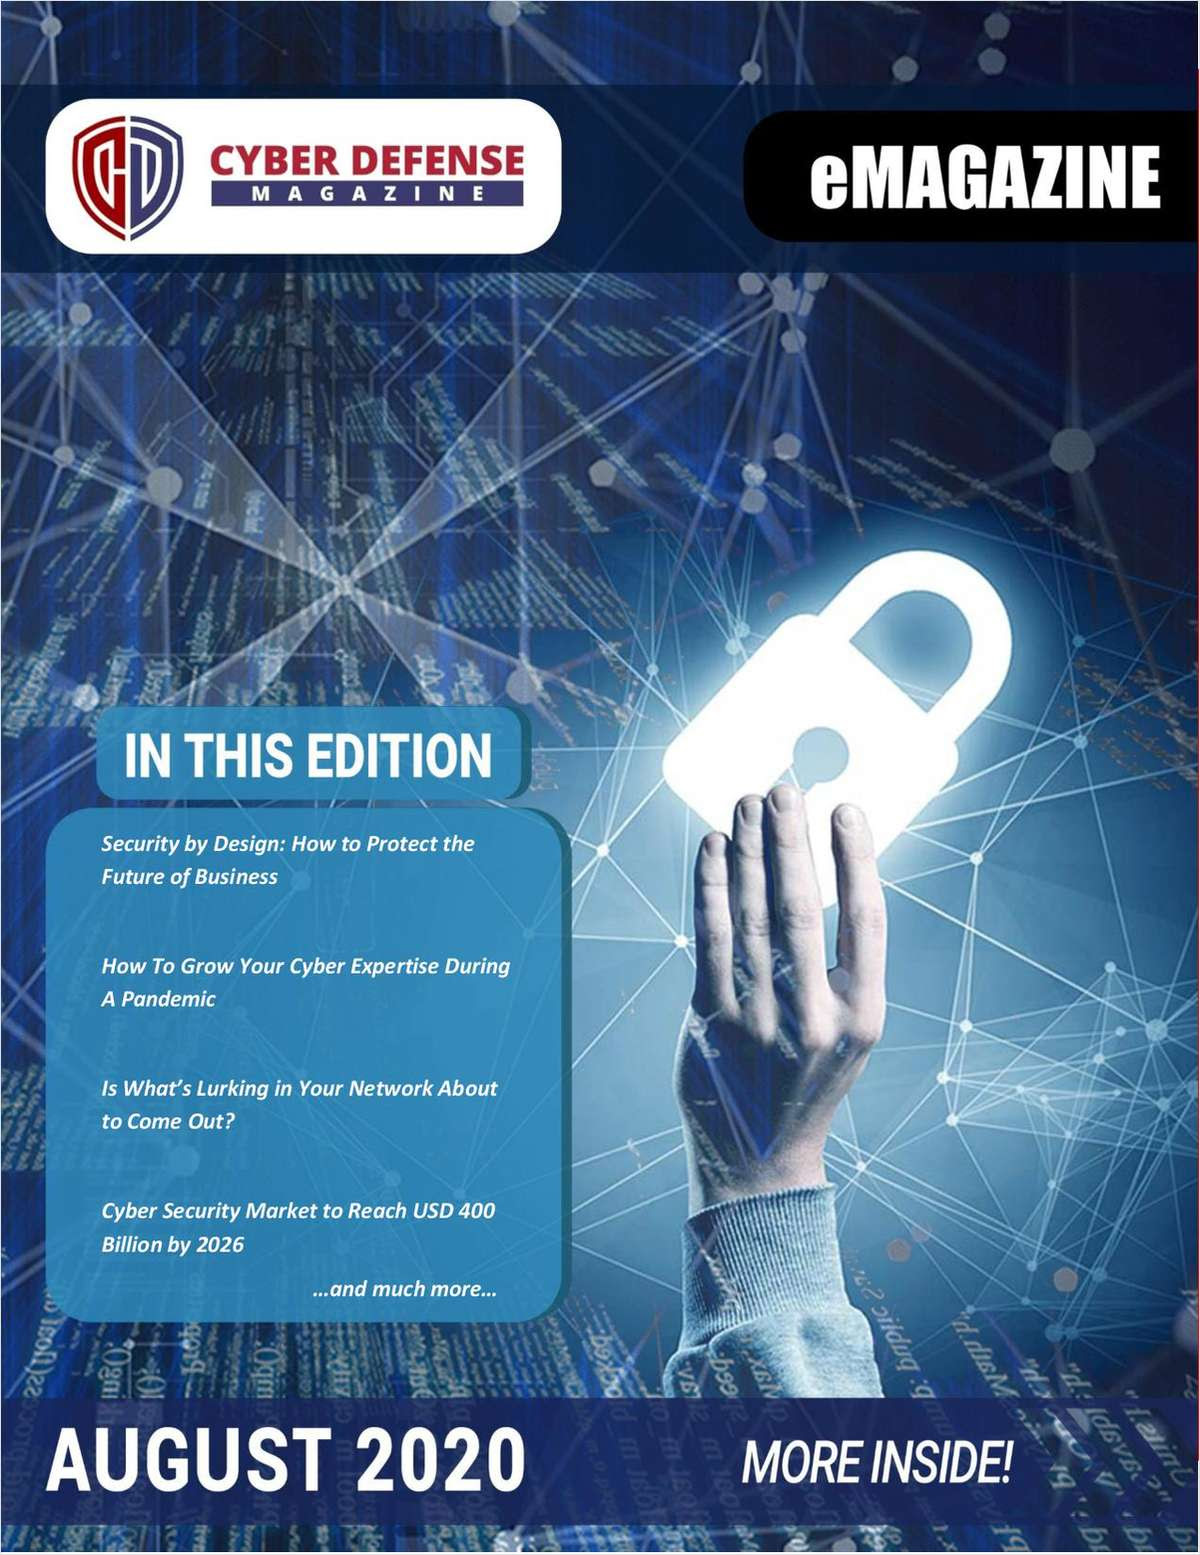 Cyber Defense Magazine – August 2020 has arrived. Enjoy it!